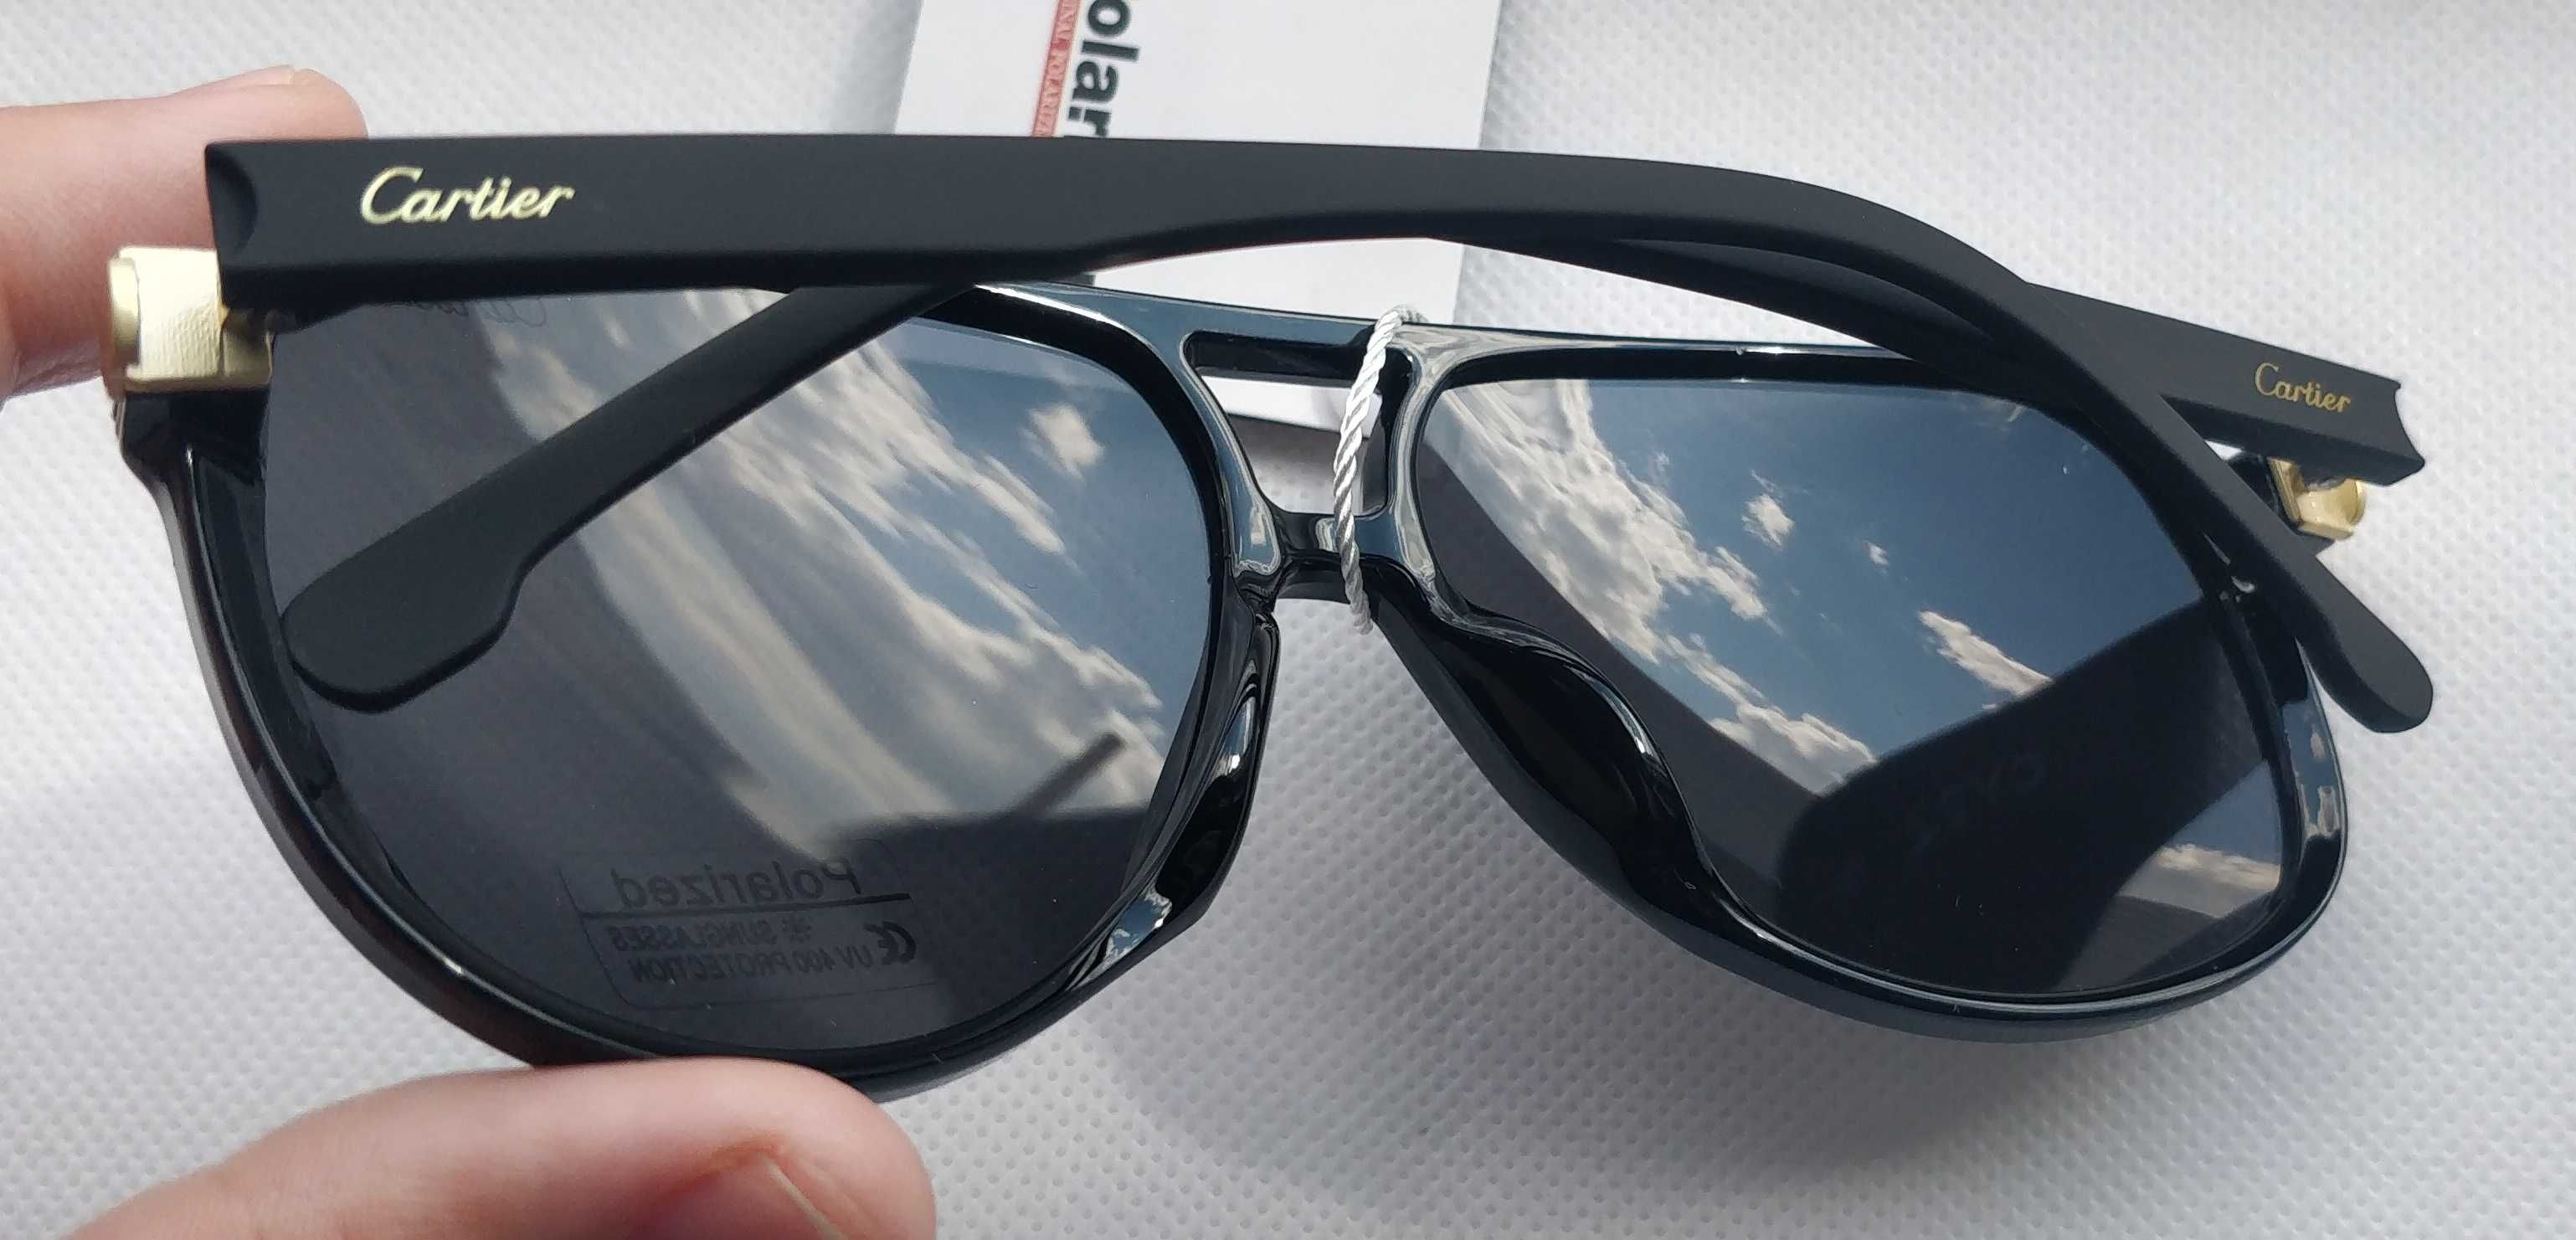 Ochelari de soare Cartier model 8, lentile negre, polarizate